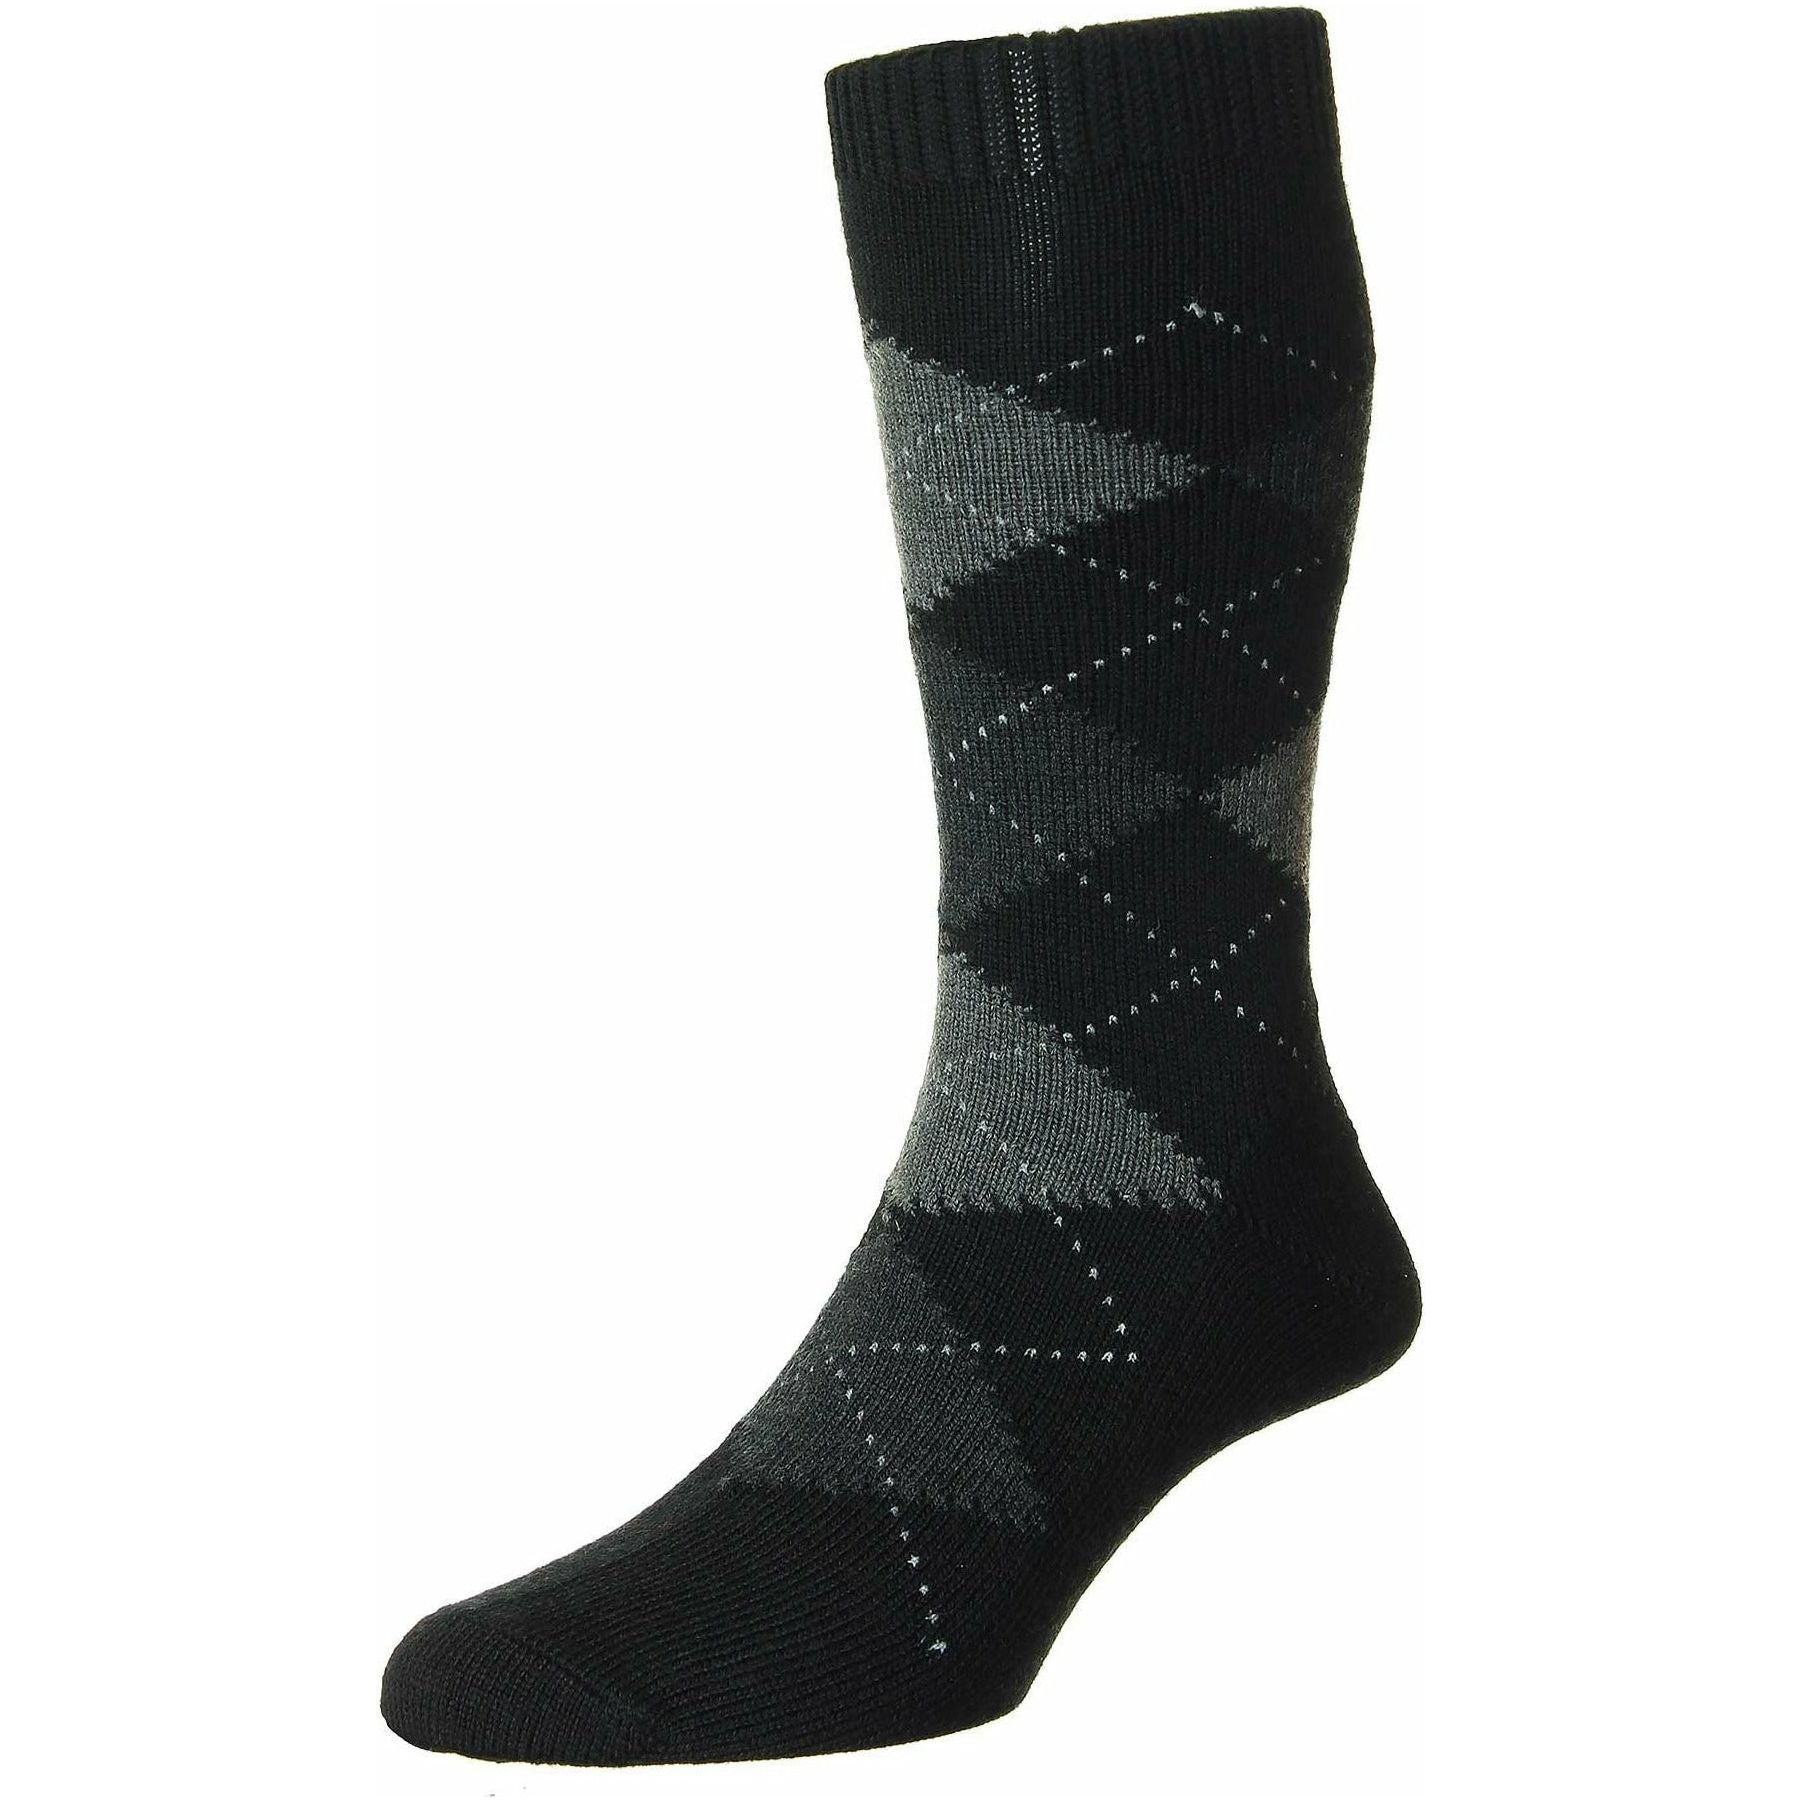 Racton Merino Wool Argyle Dress Socks